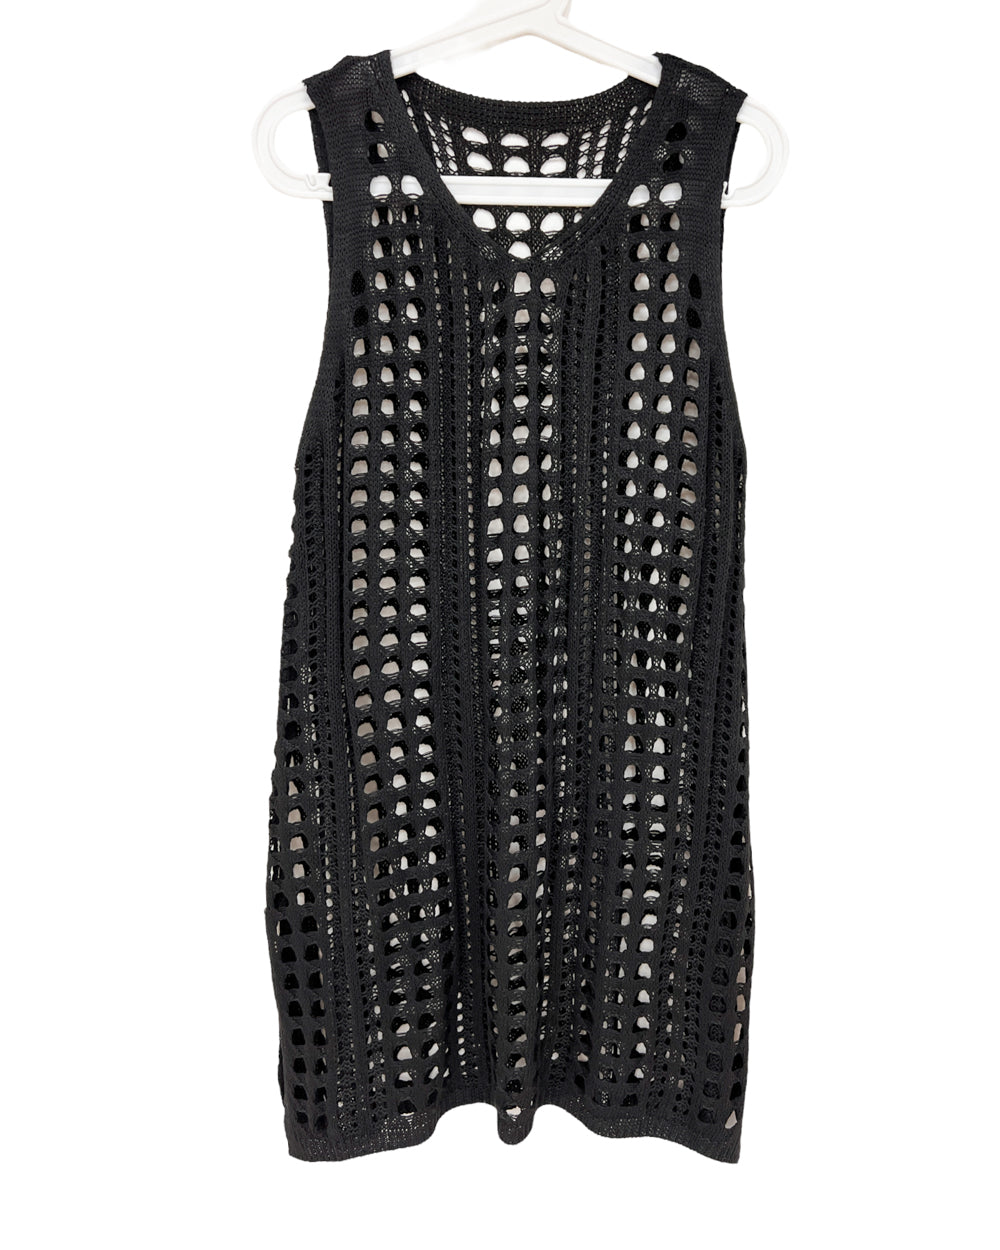 black net knitted vest cover up dress *pre-order*